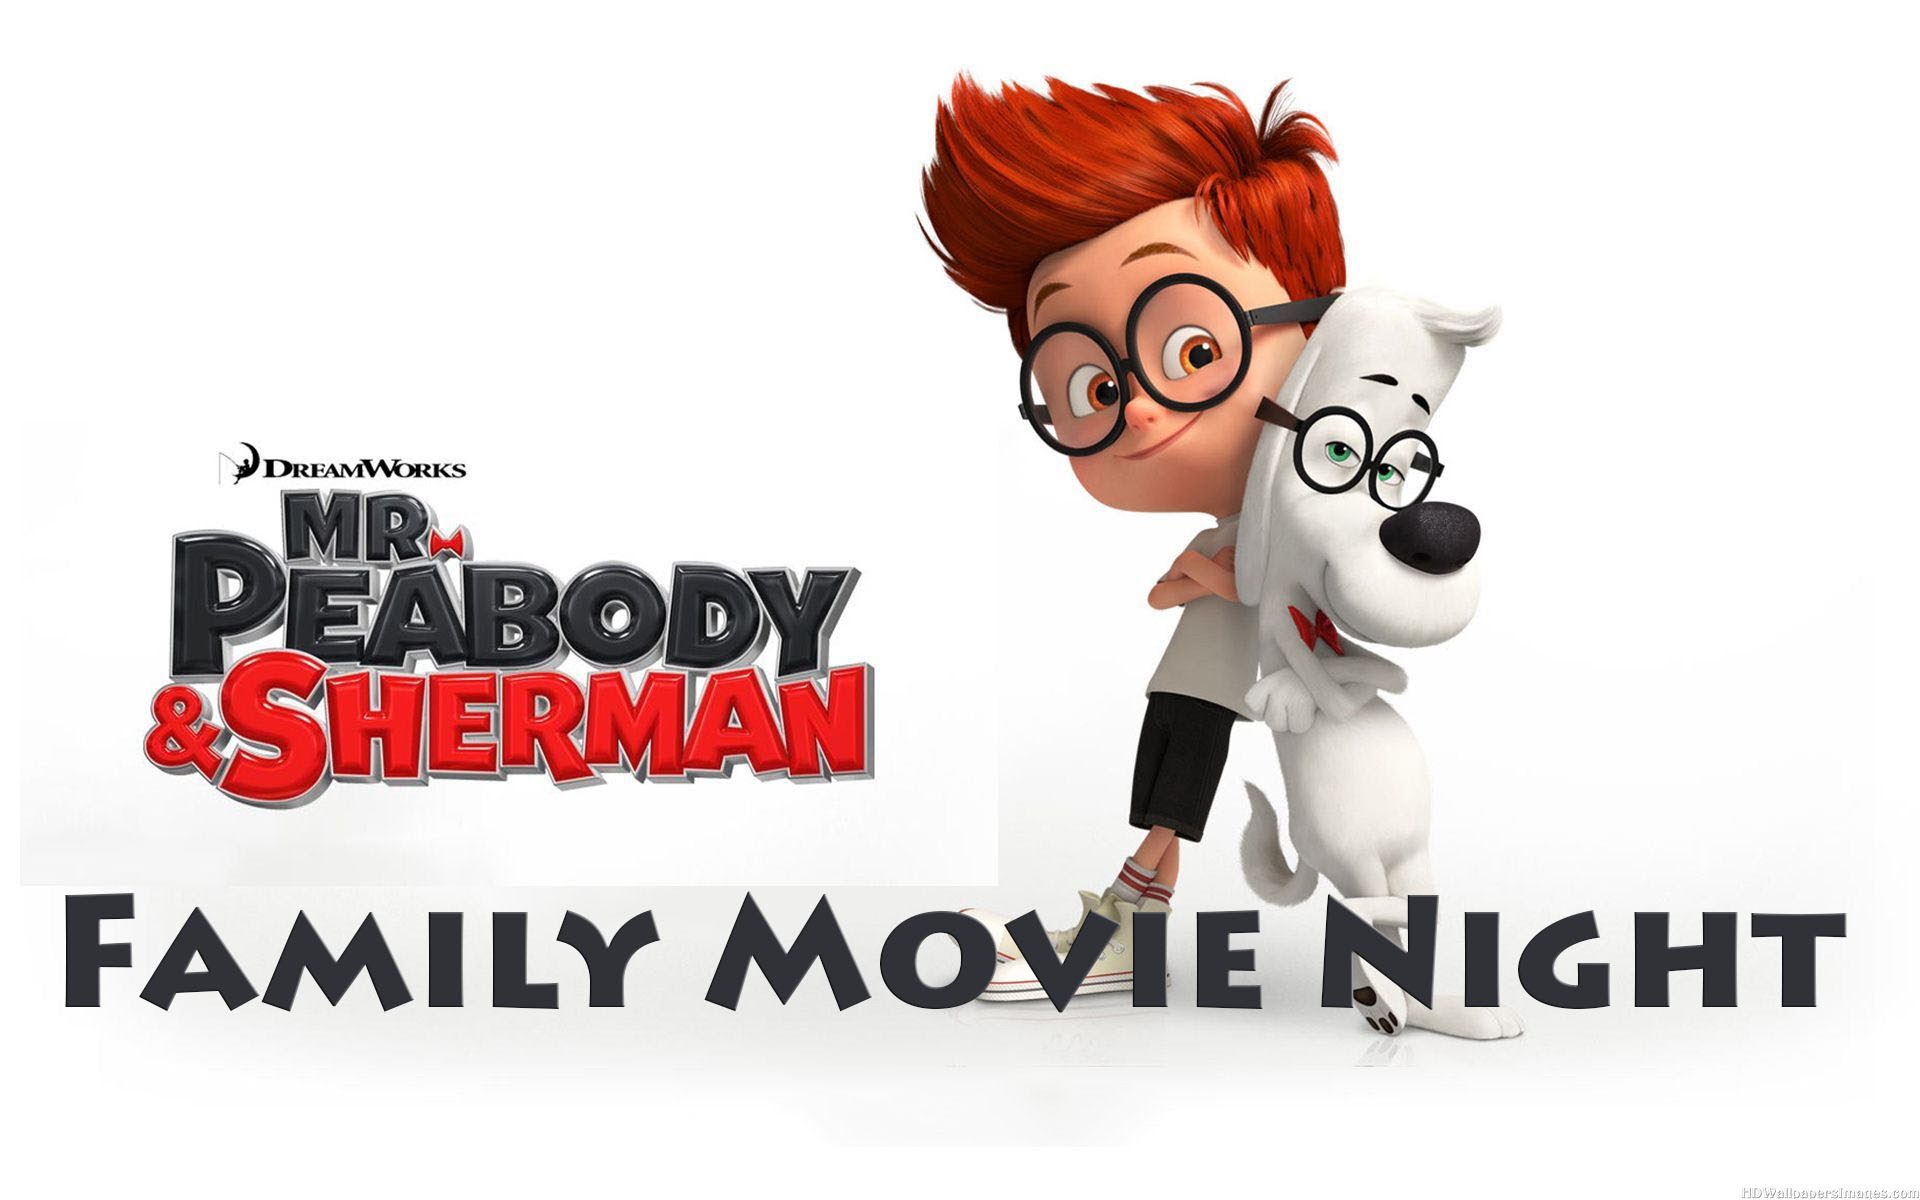 Family Movie Night: Mr. Peabody and Sherman